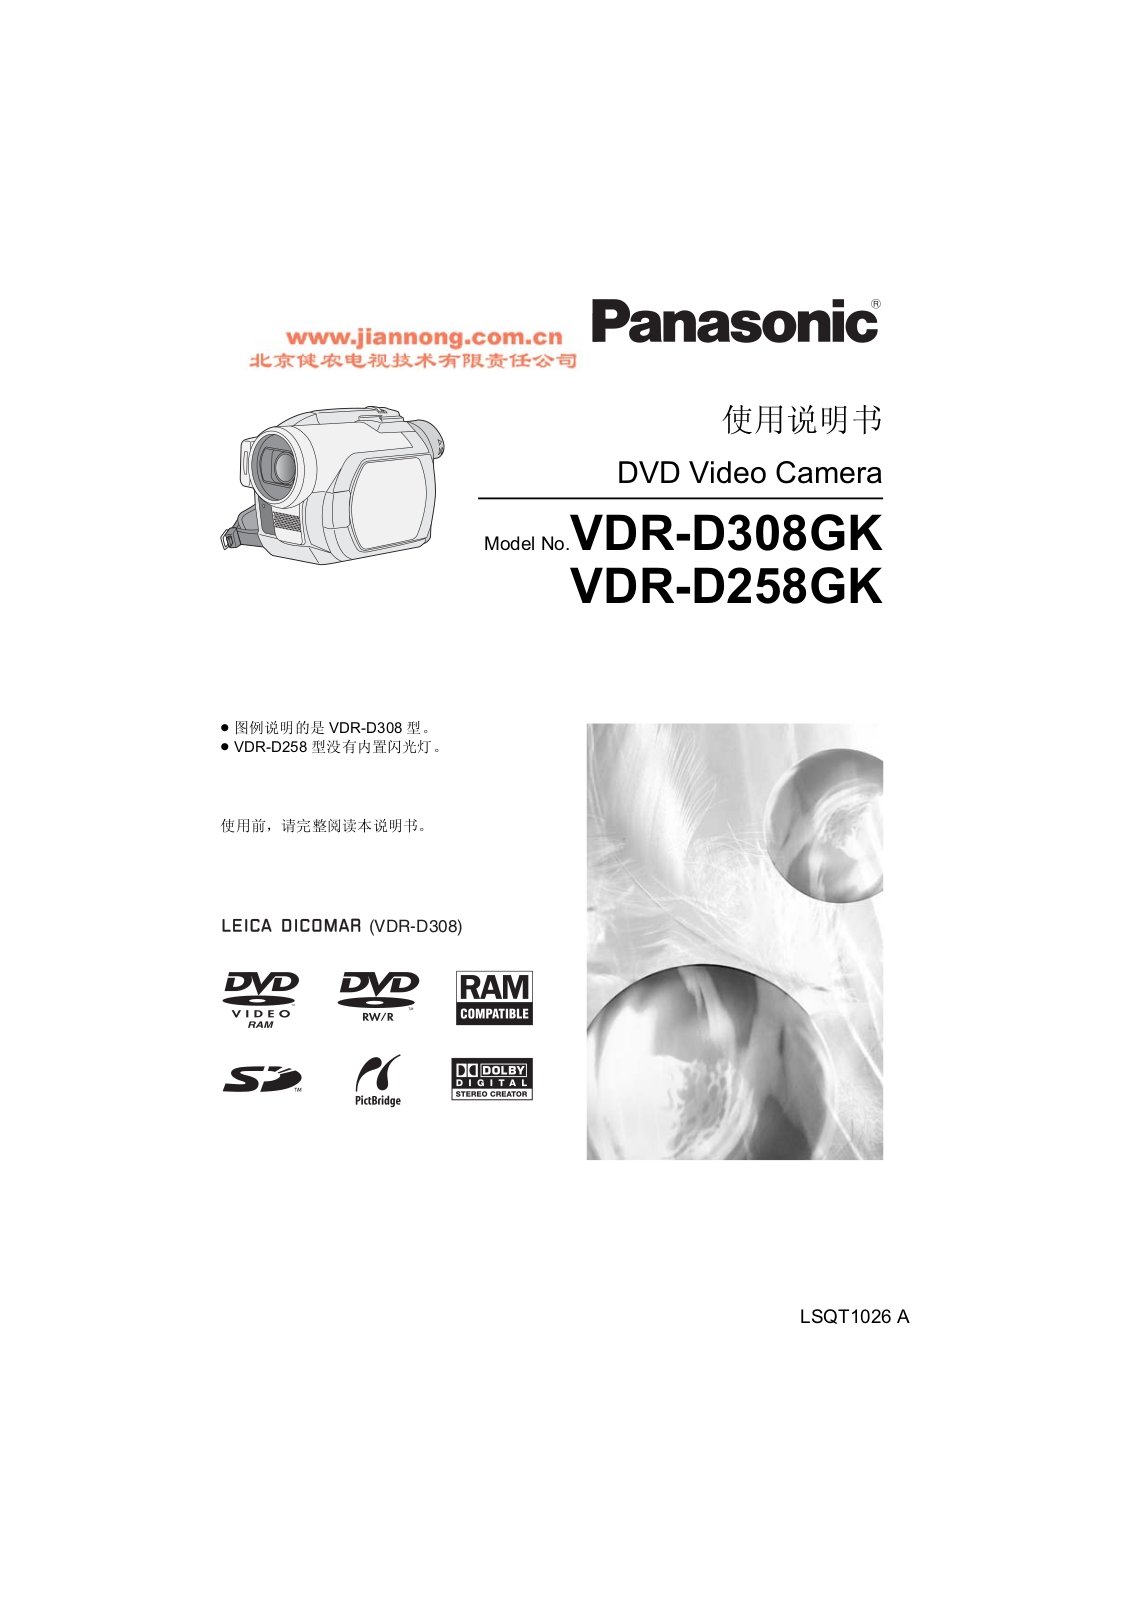 Panasonic VDR-D258GK User Manual